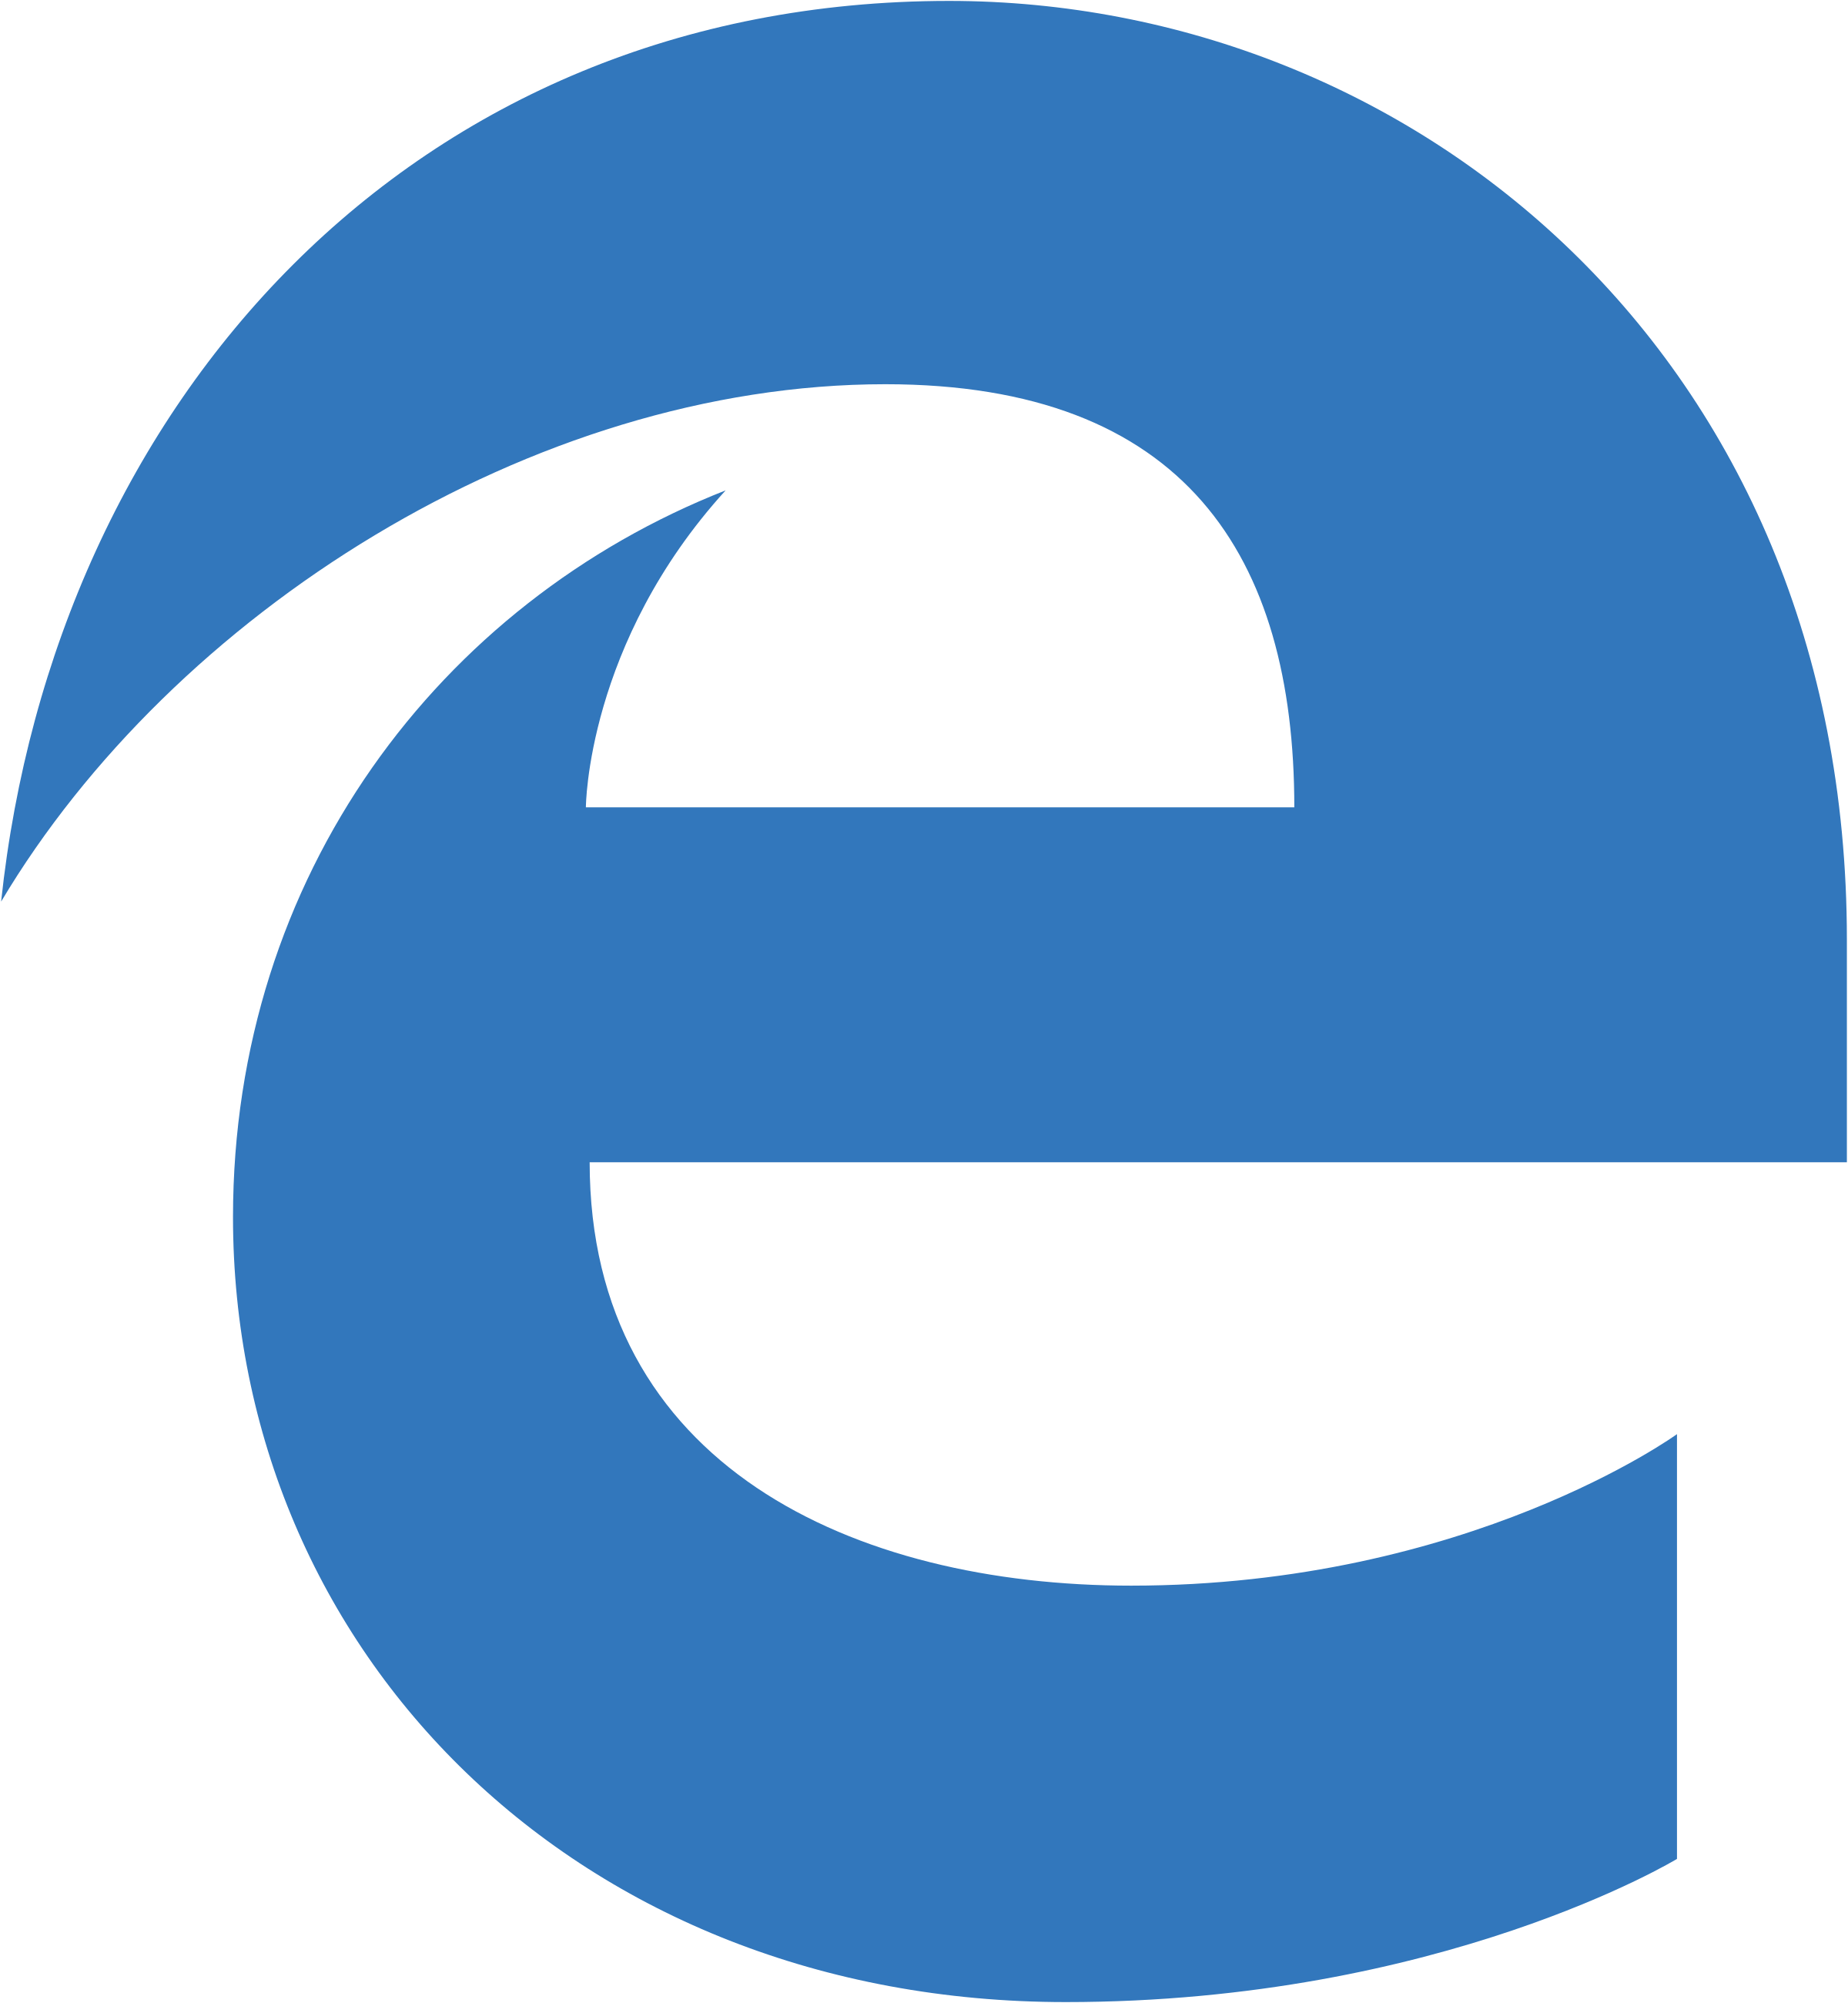 Microsoft clipart vector. Edge logo png transparent